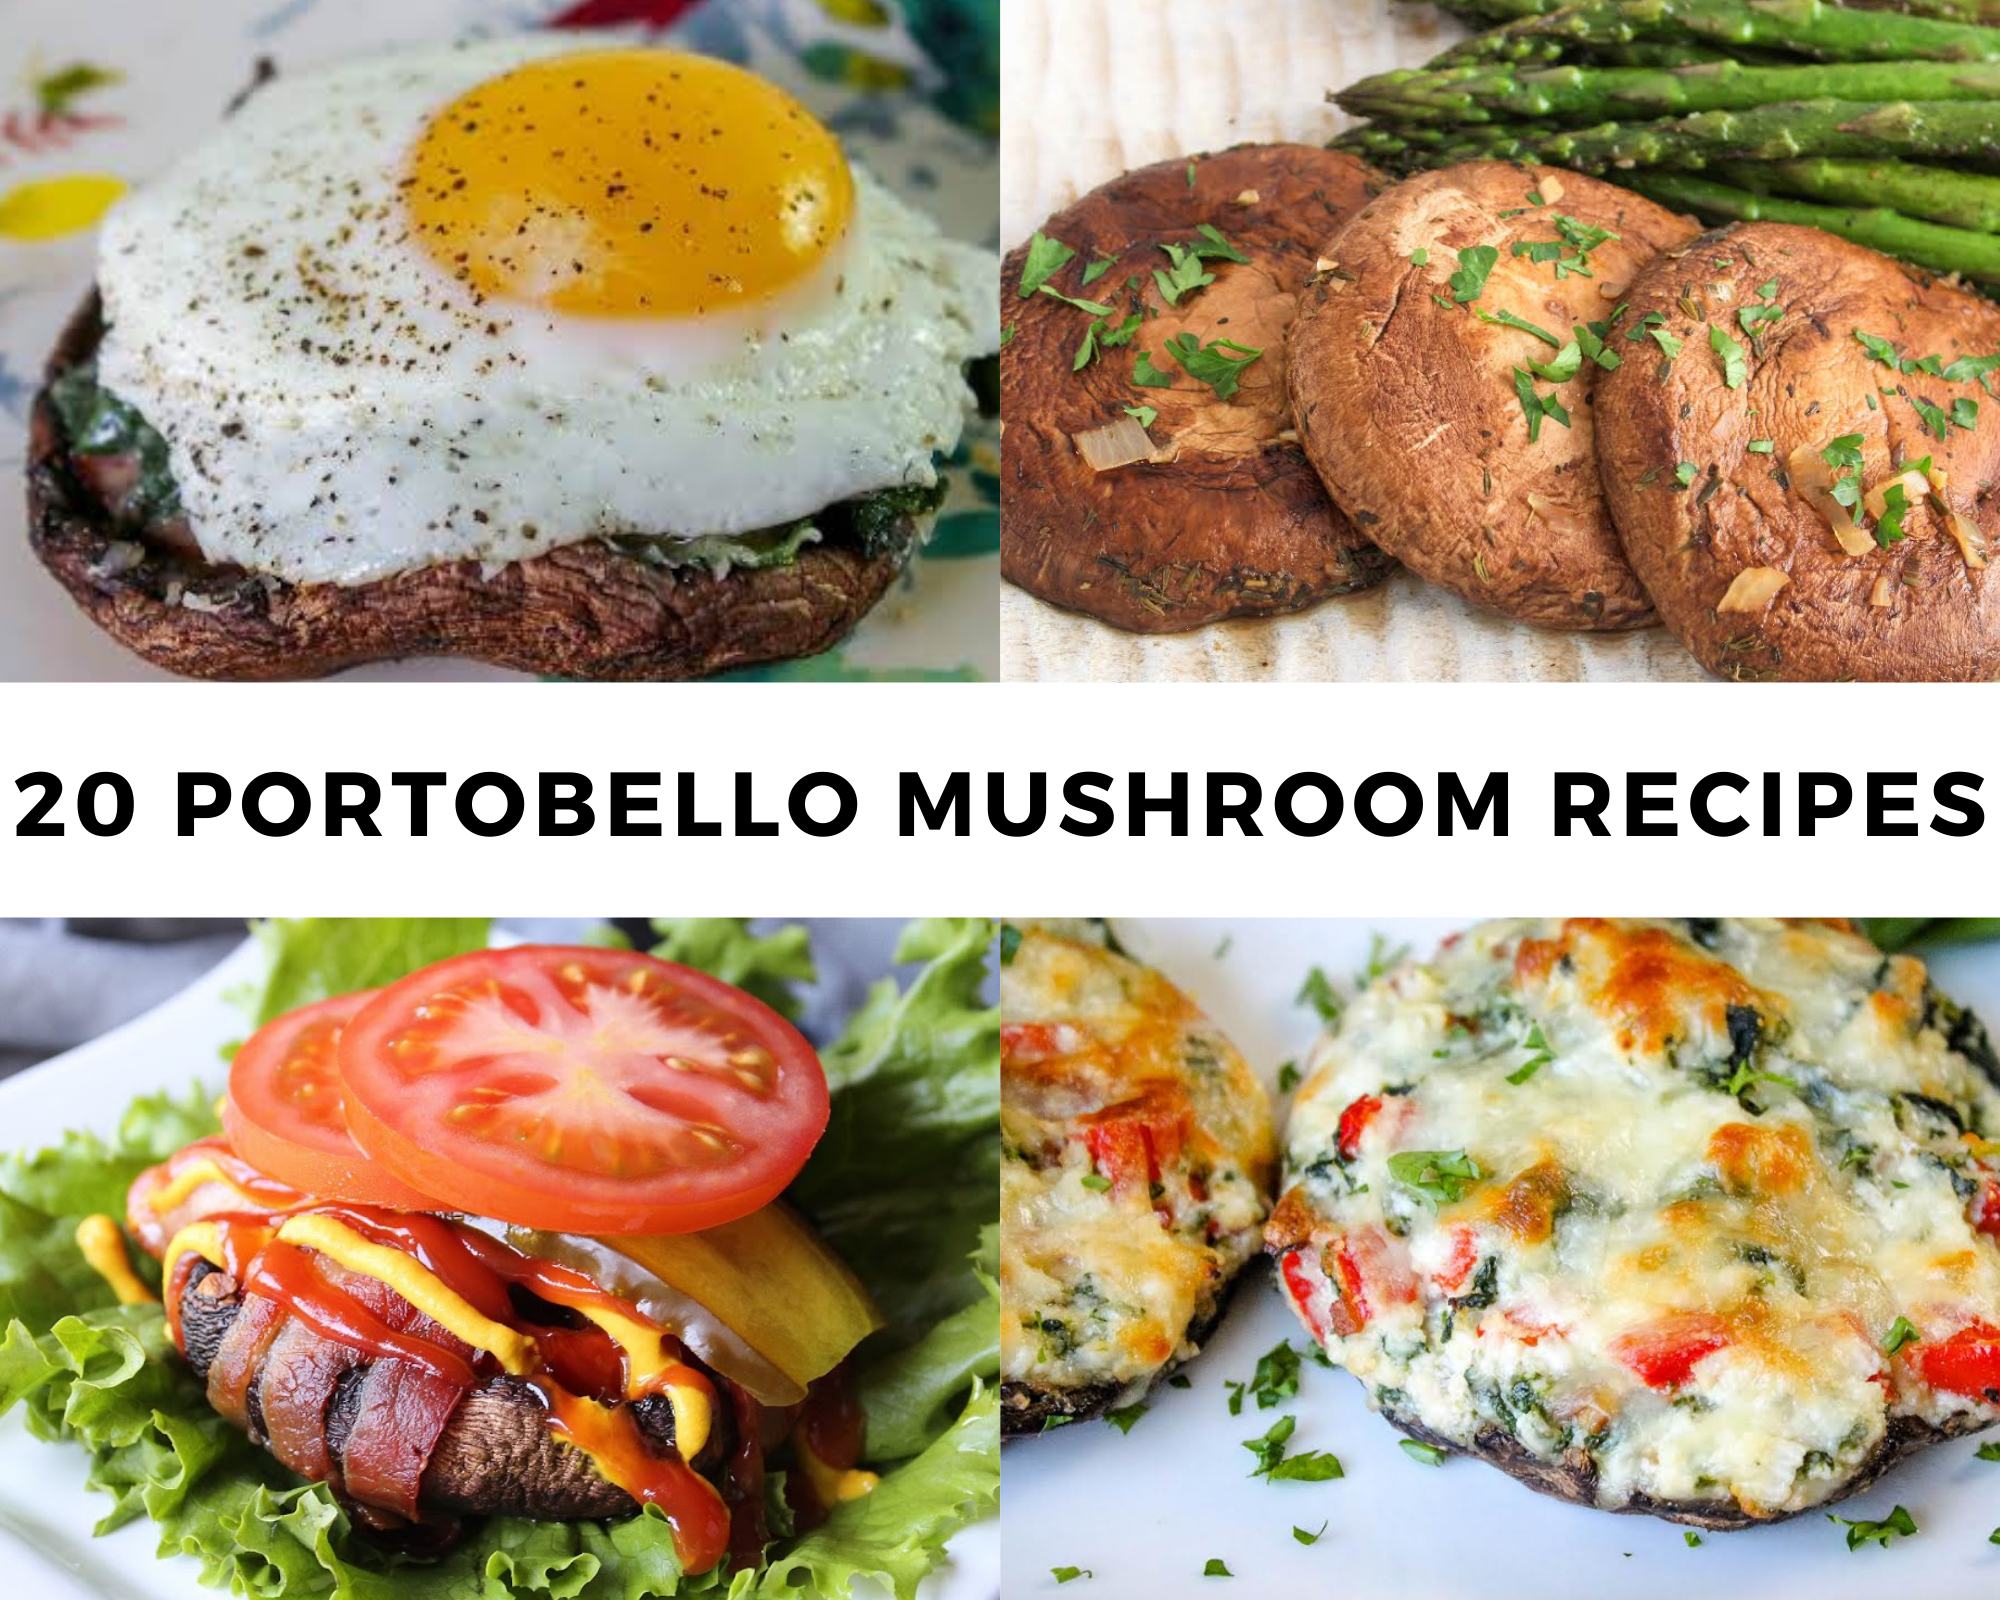 20 Portobello mushroom recipes